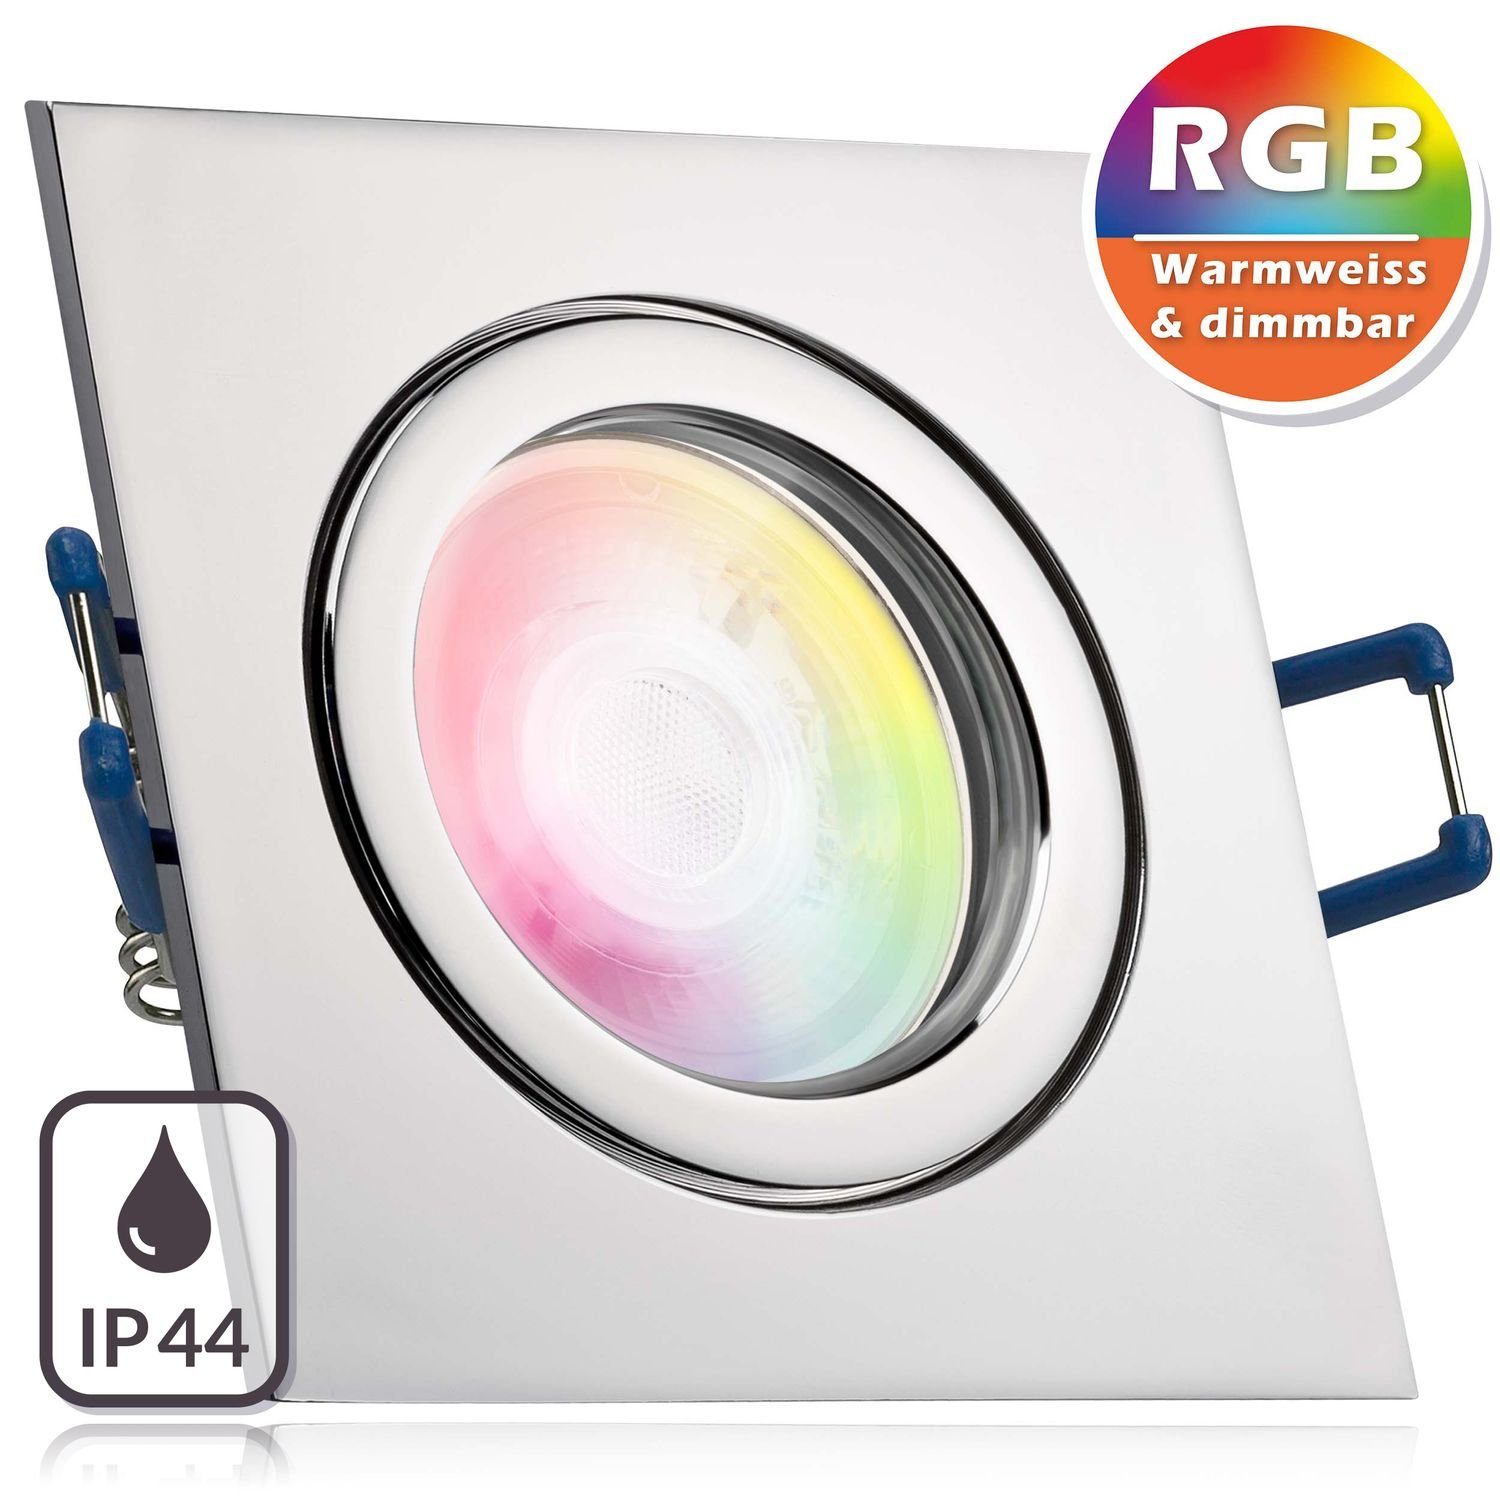 LEDANDO LED Einbaustrahler IP44 3W LE Set von in chrom LED extra RGB LED flach Einbaustrahler mit